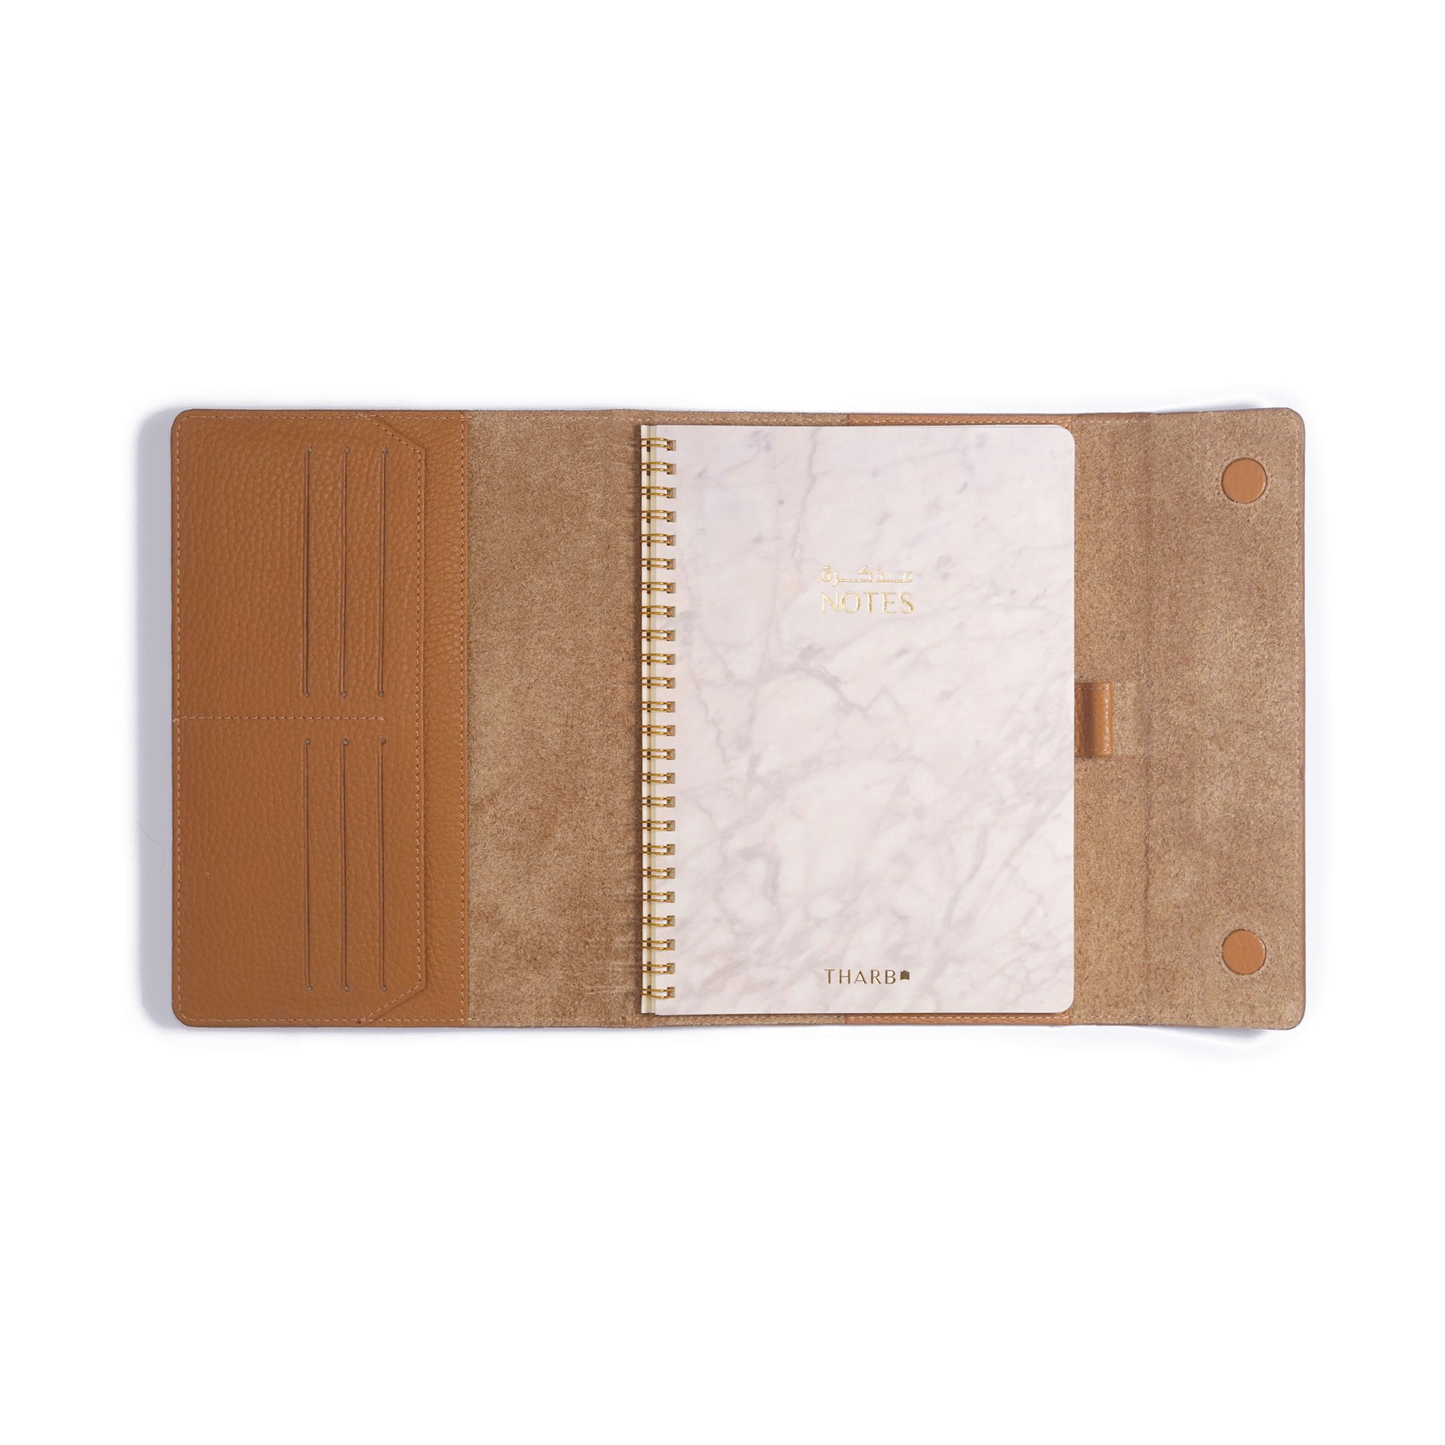 Mayed notebook sleeve